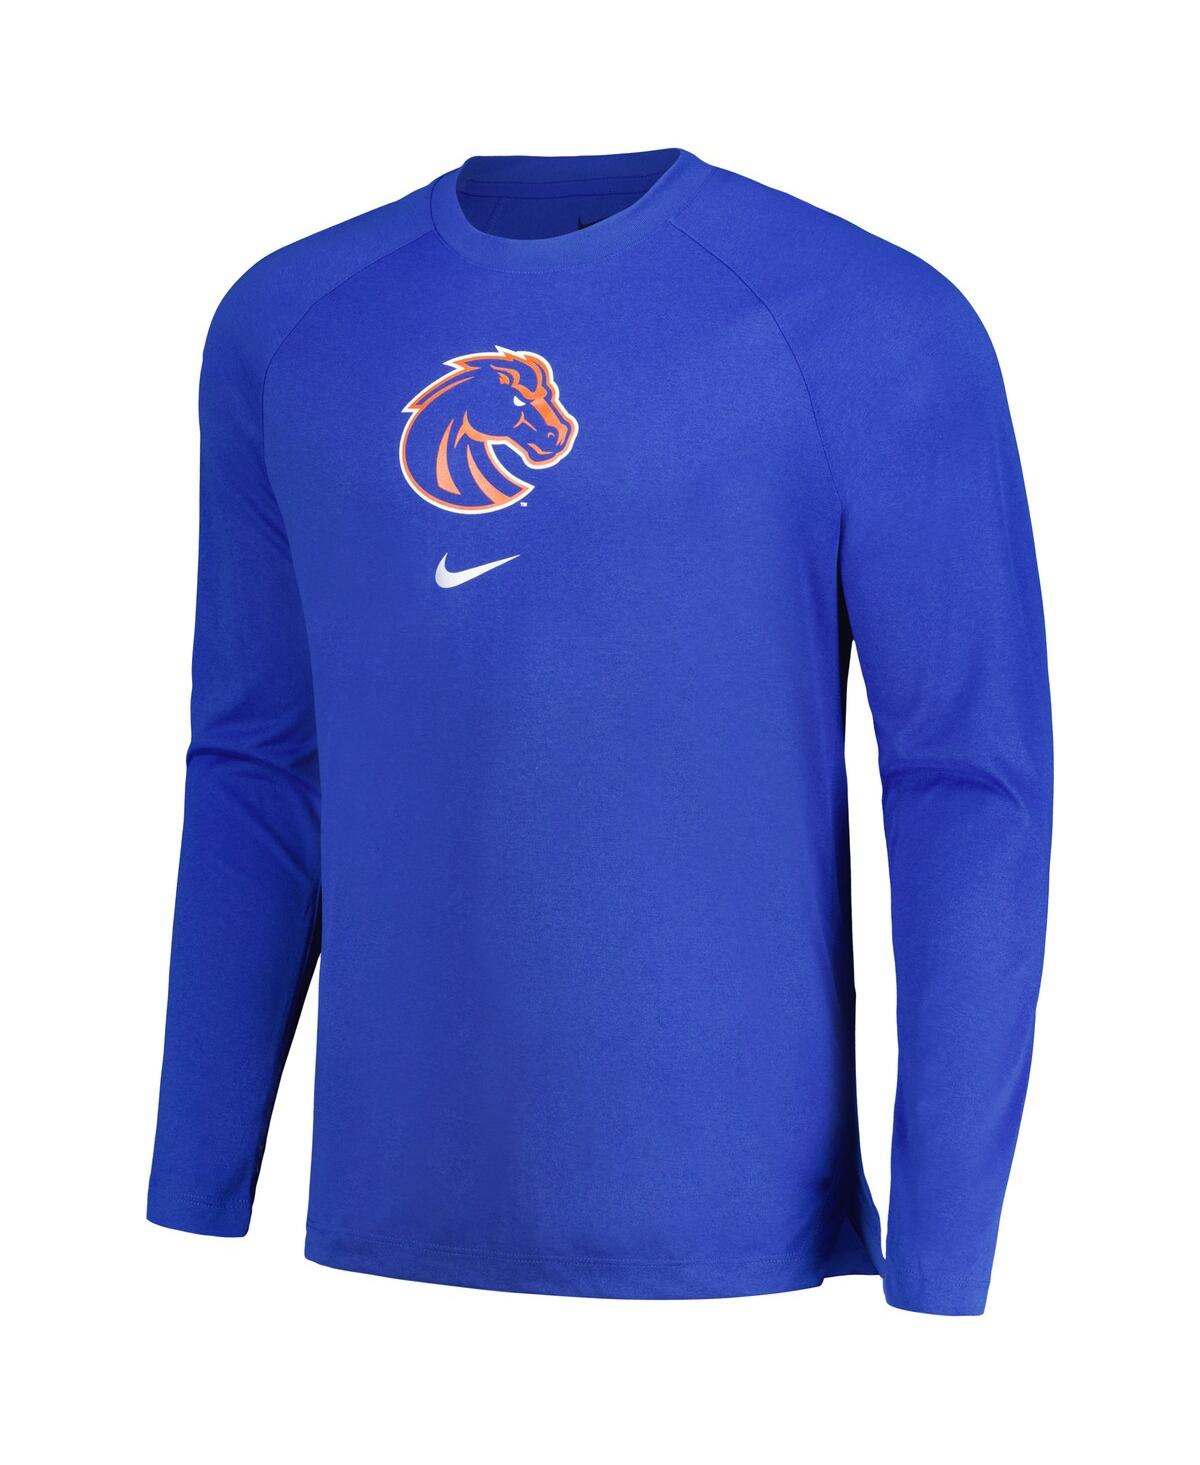 Shop Nike Men's Royal Boise State Broncos Basketball Spotlight Raglan Performance Long Sleeve T-shirt